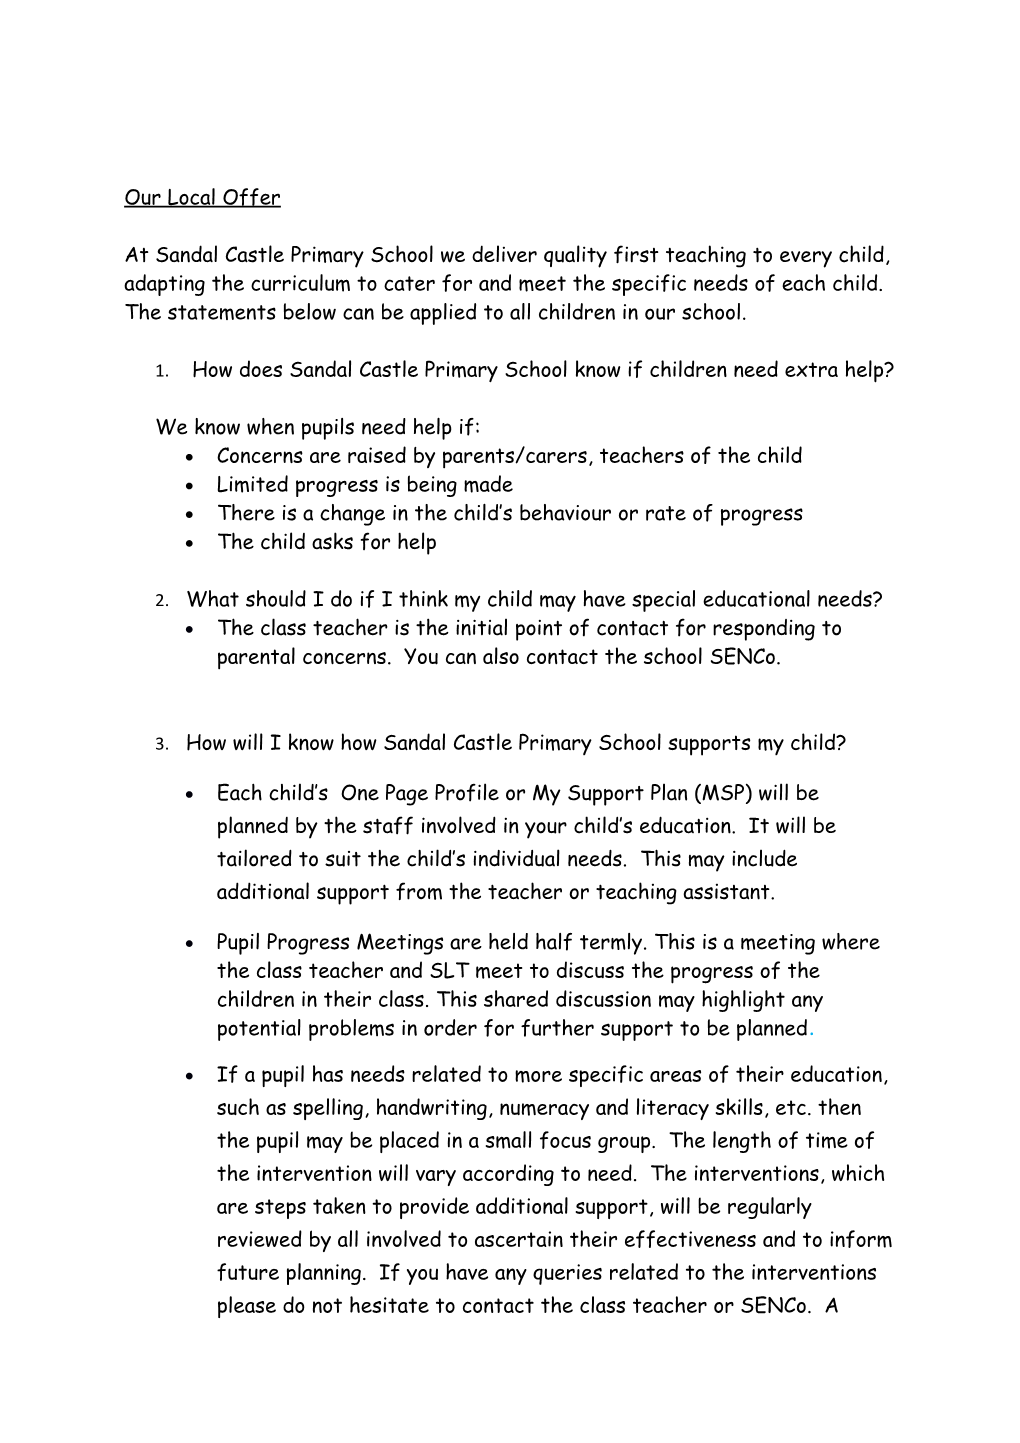 Sandal Castle Primary School SEND Information Report